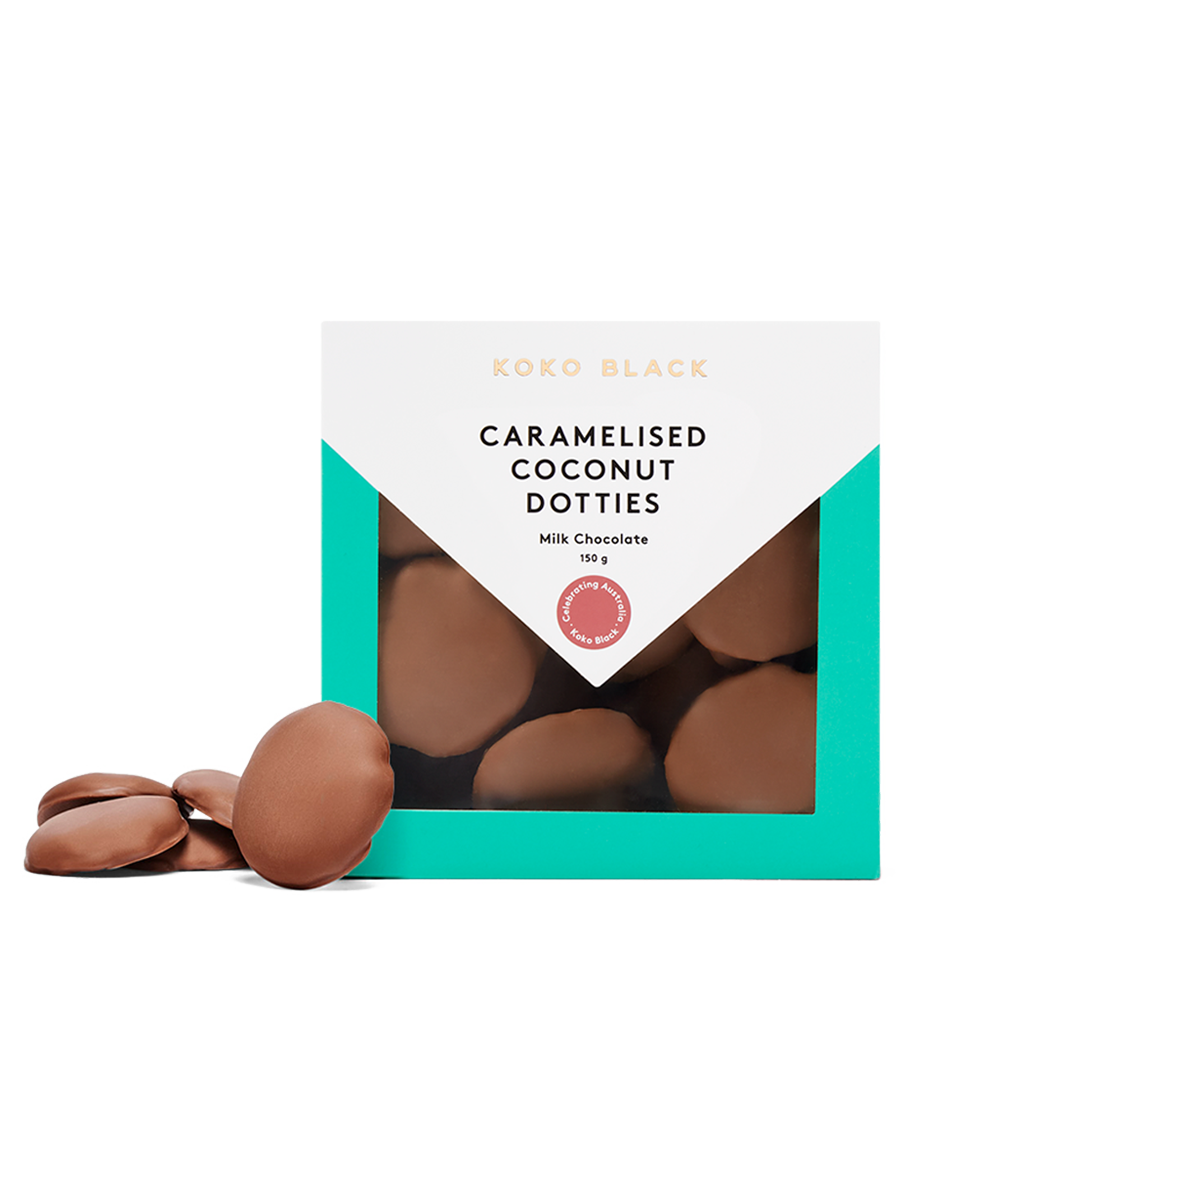 Caramelised Coconut Dotties 150g | Milk Chocolate